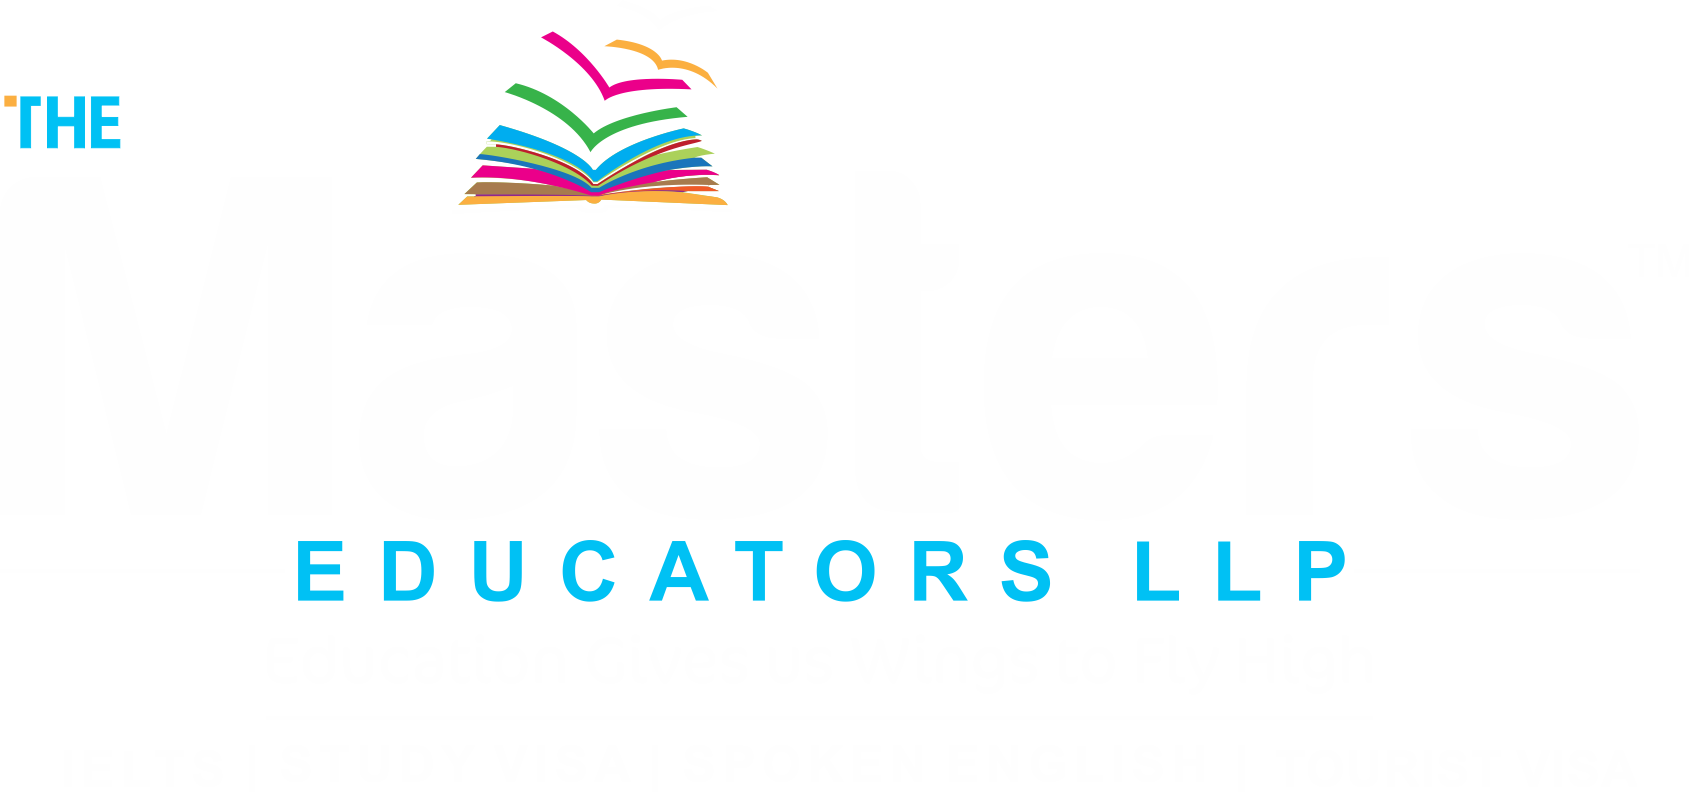 Masters-logo